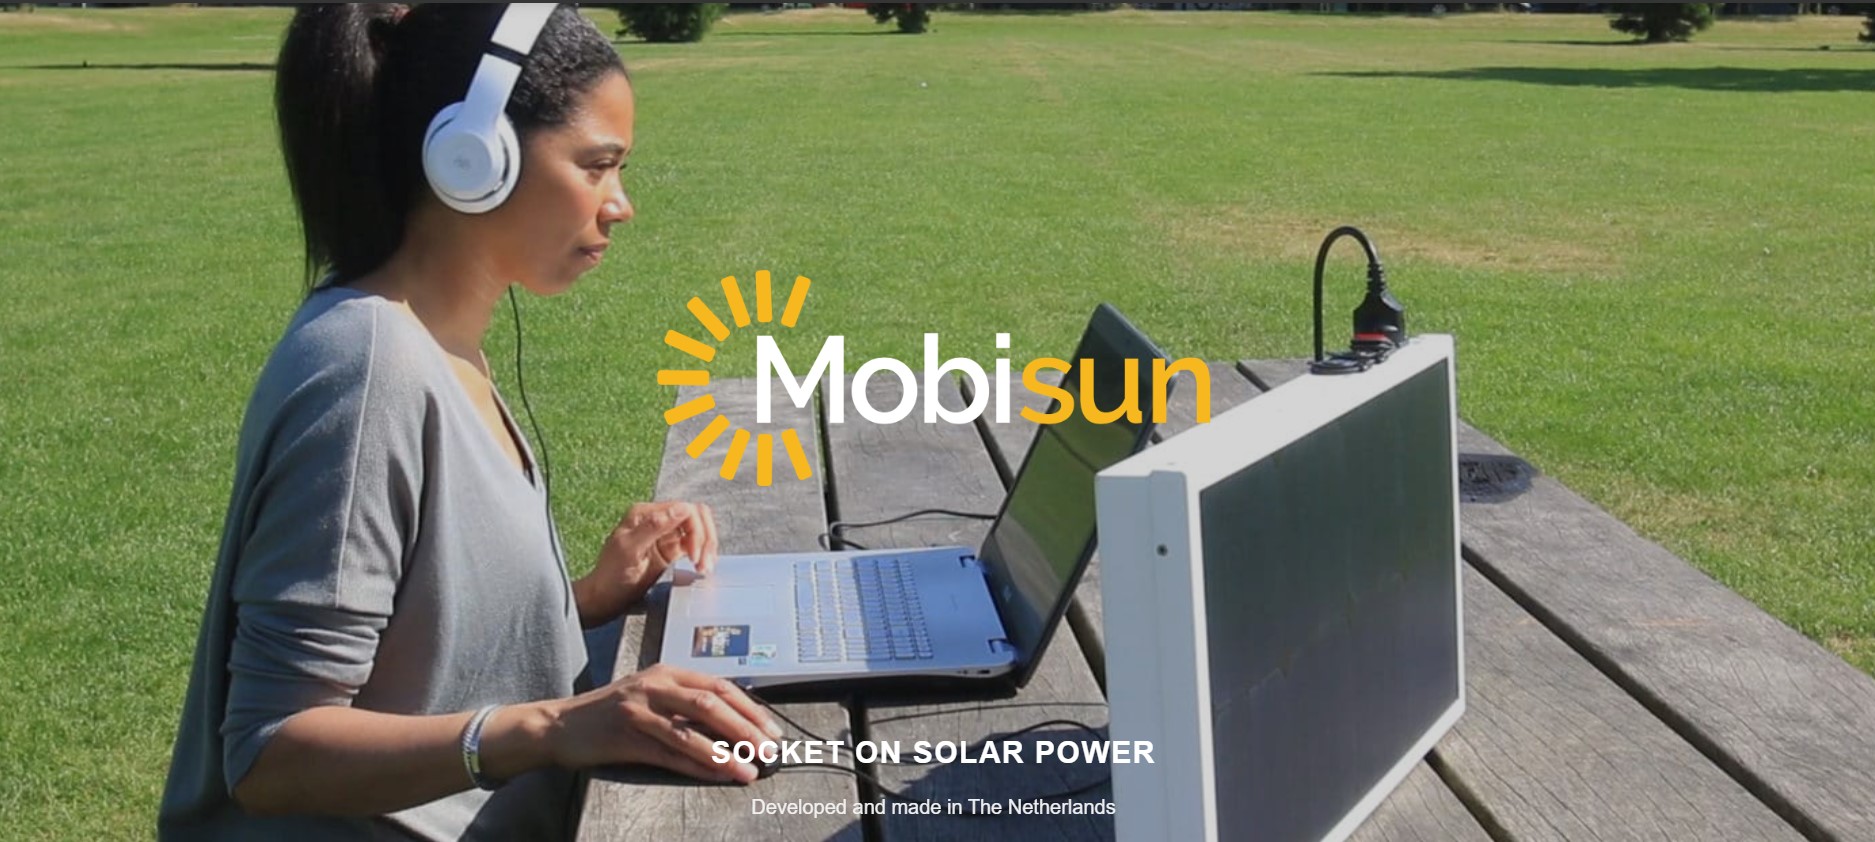 Mobisun Pro portable solar generator connections 2pin GX16 DC input 16V - 100V